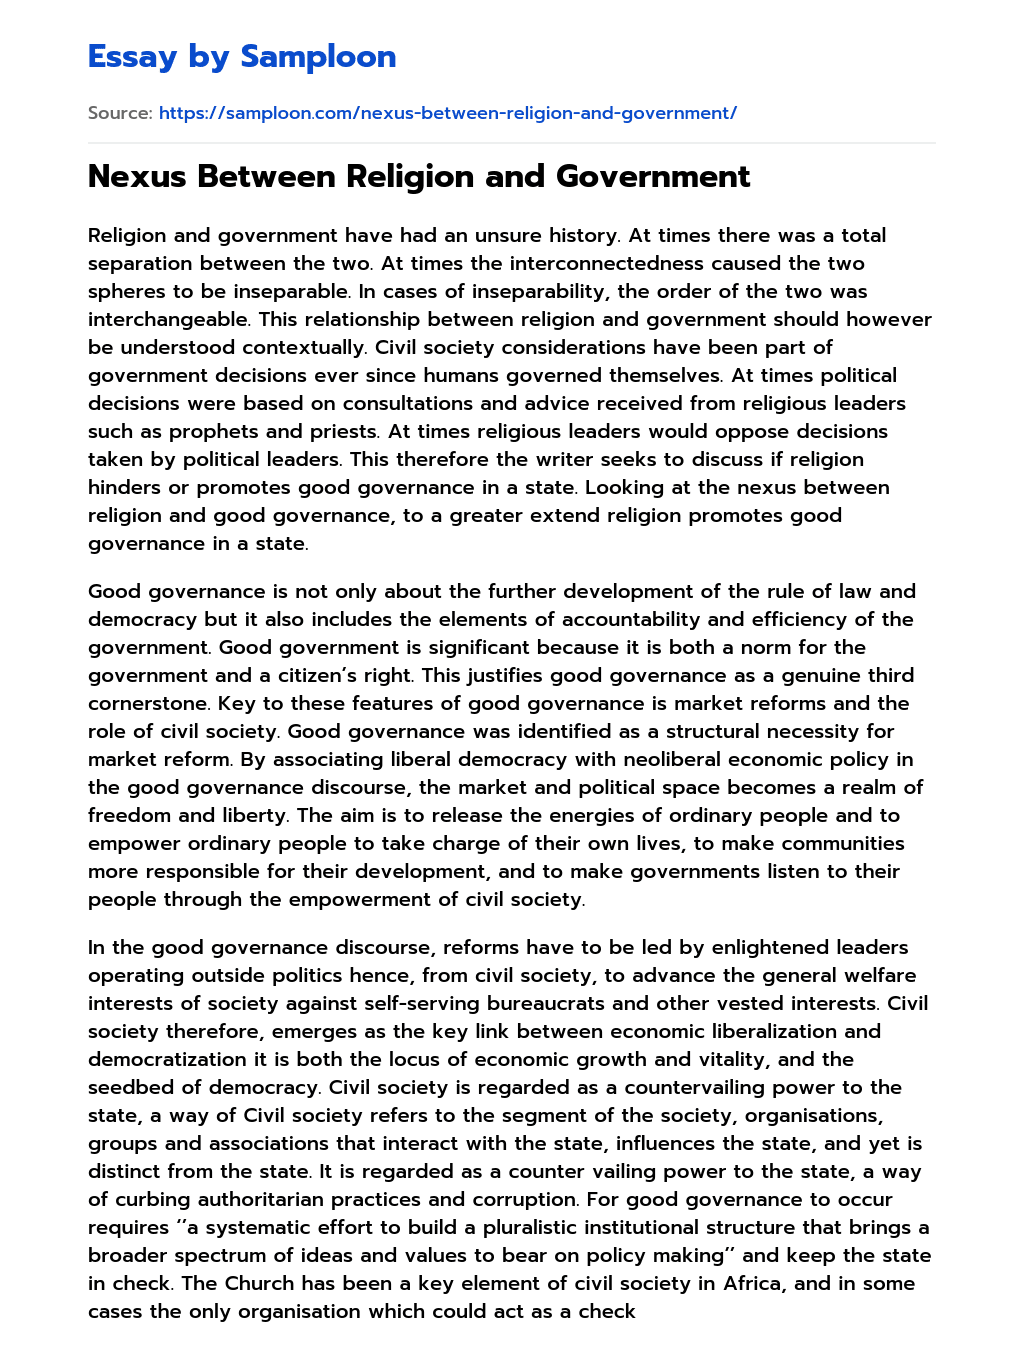 Nexus Between Religion and Government essay